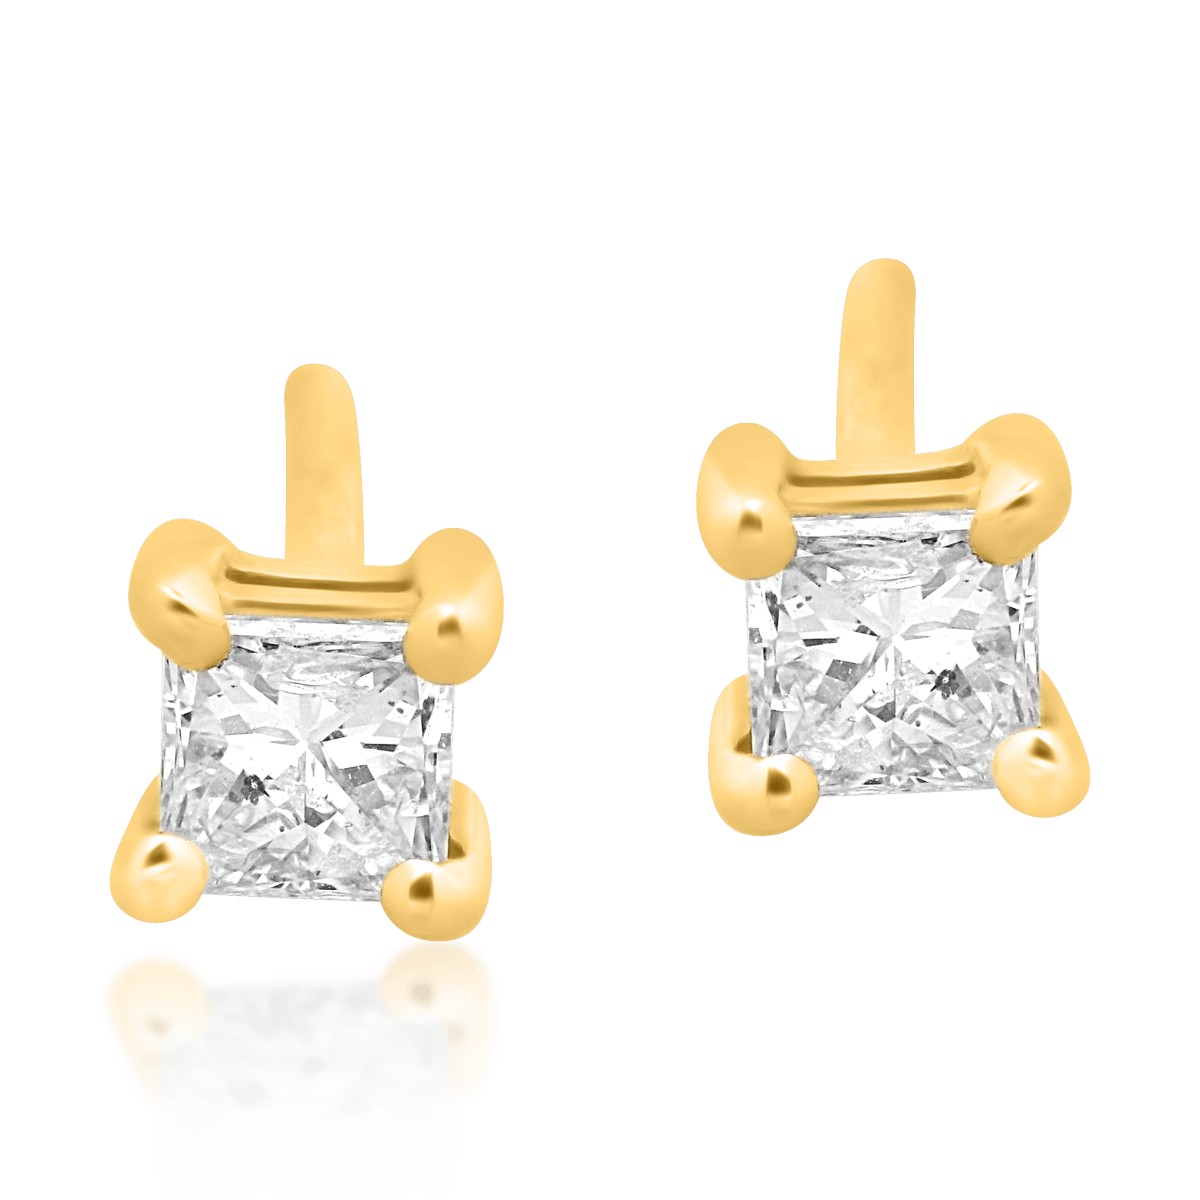 14K yellow gold earrings with 0.2ct diamonds